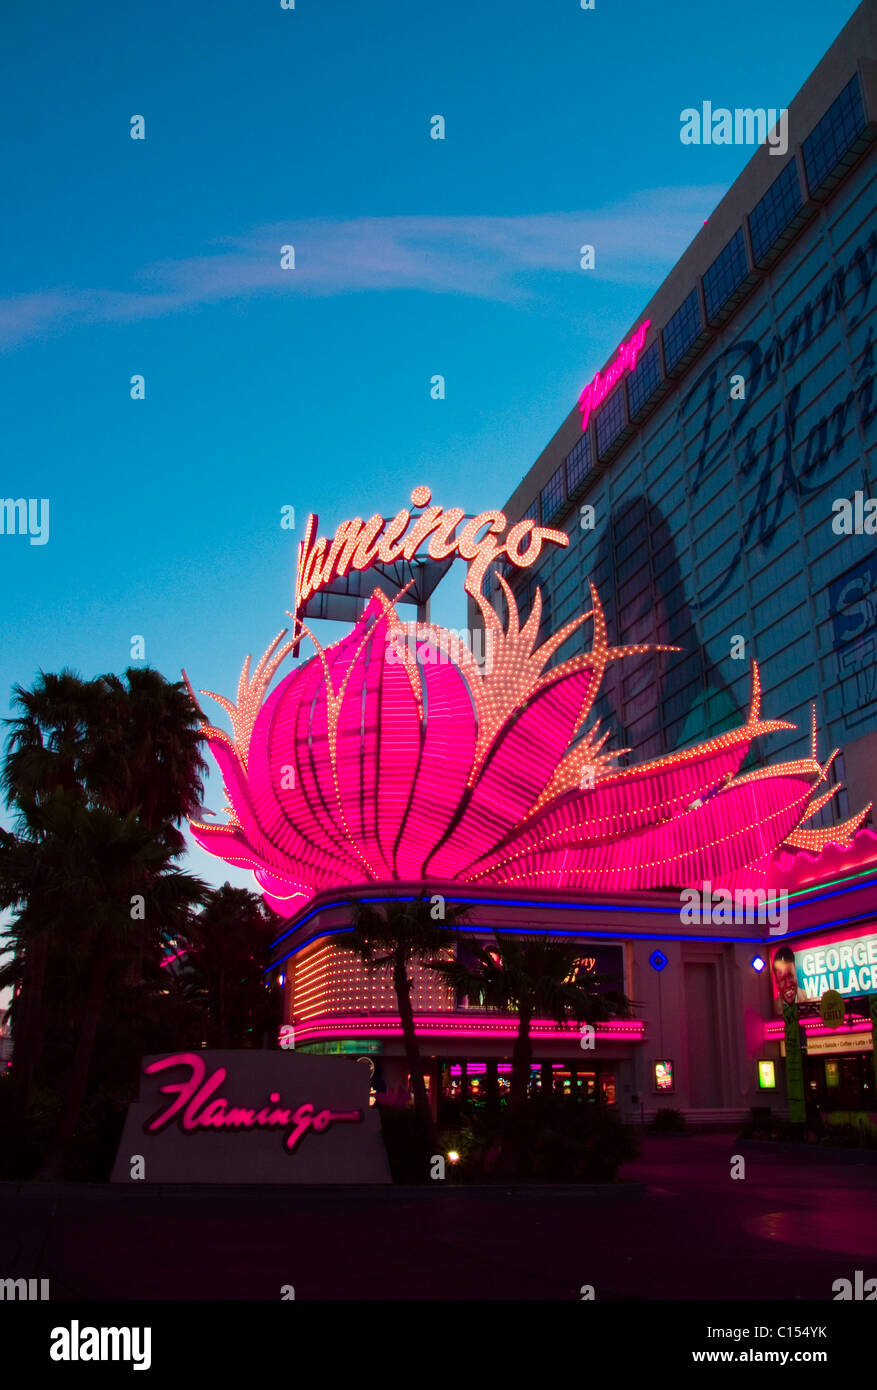 Neon signs of The Flamingo Hotel Casino Stock Photo